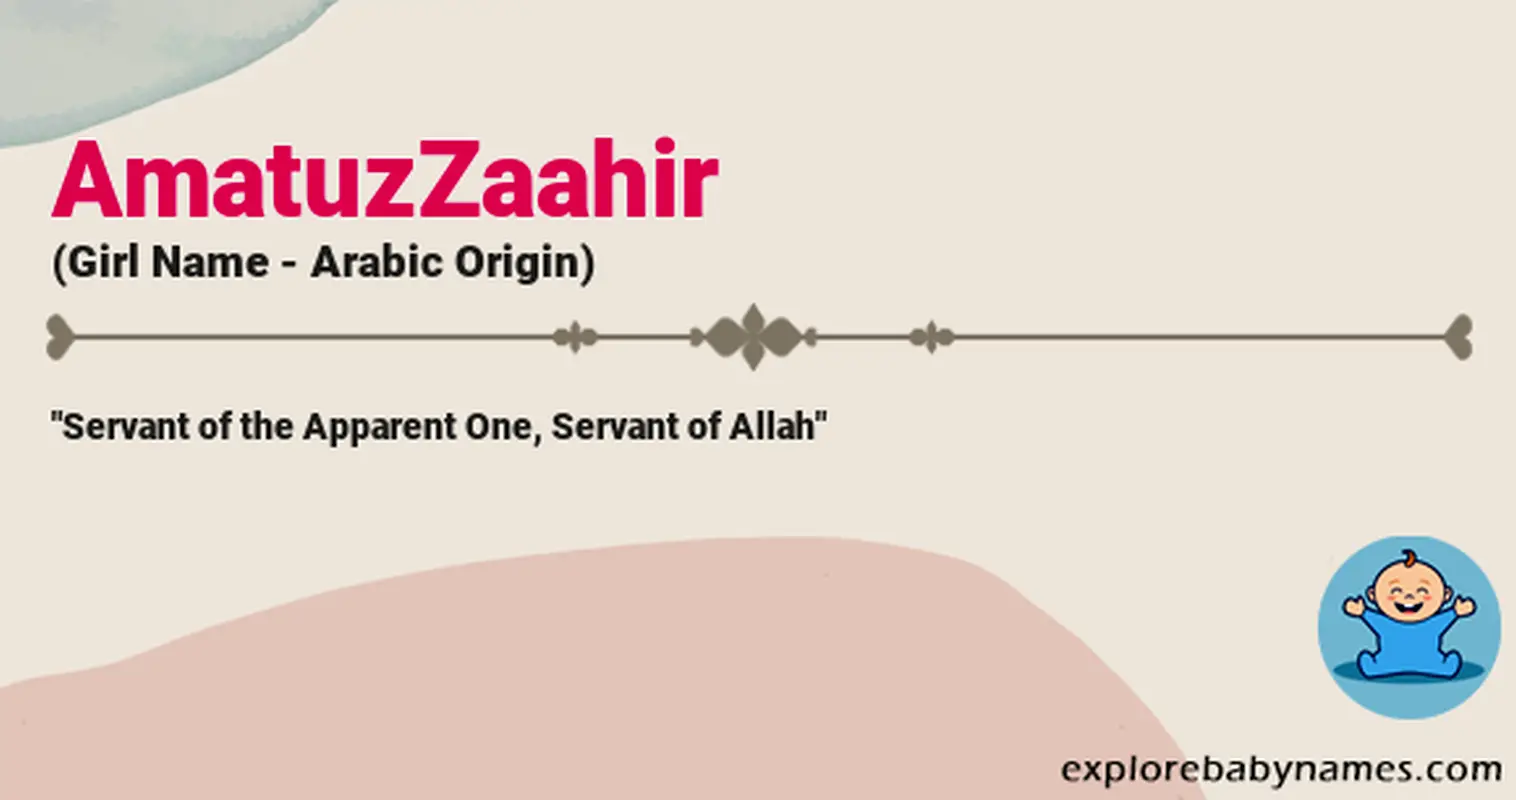 Meaning of AmatuzZaahir